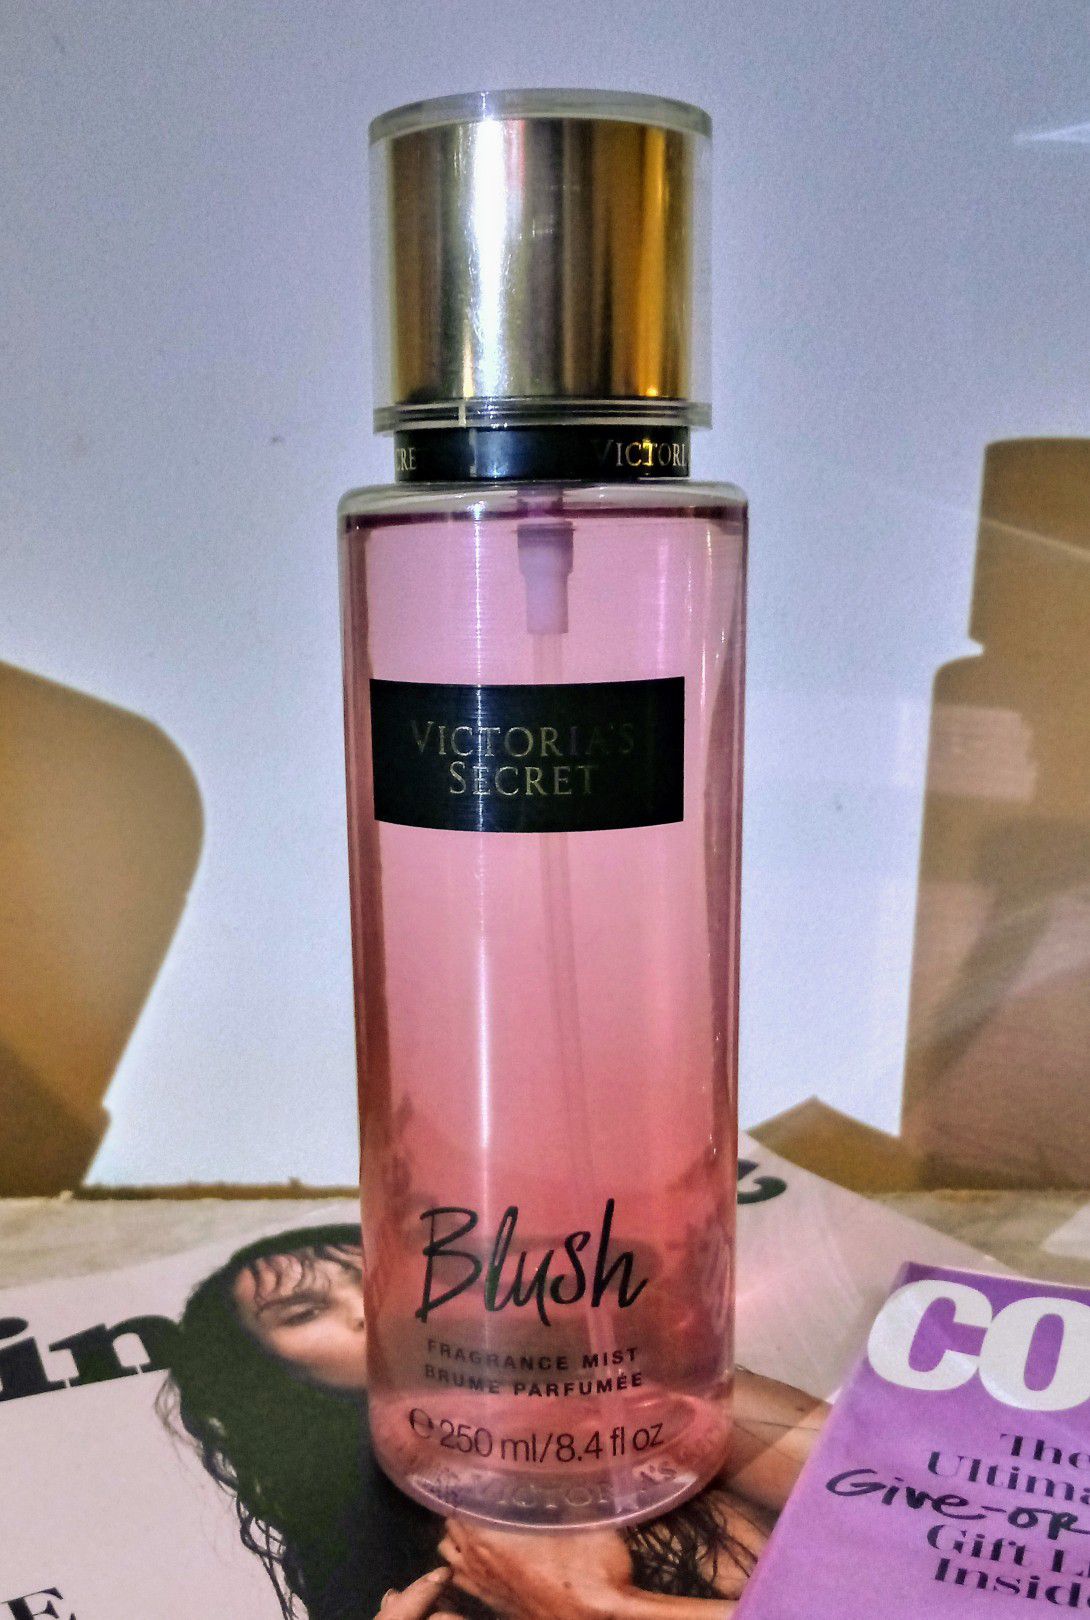 Victoria's Secret "BLUSH" Fragrance Mist